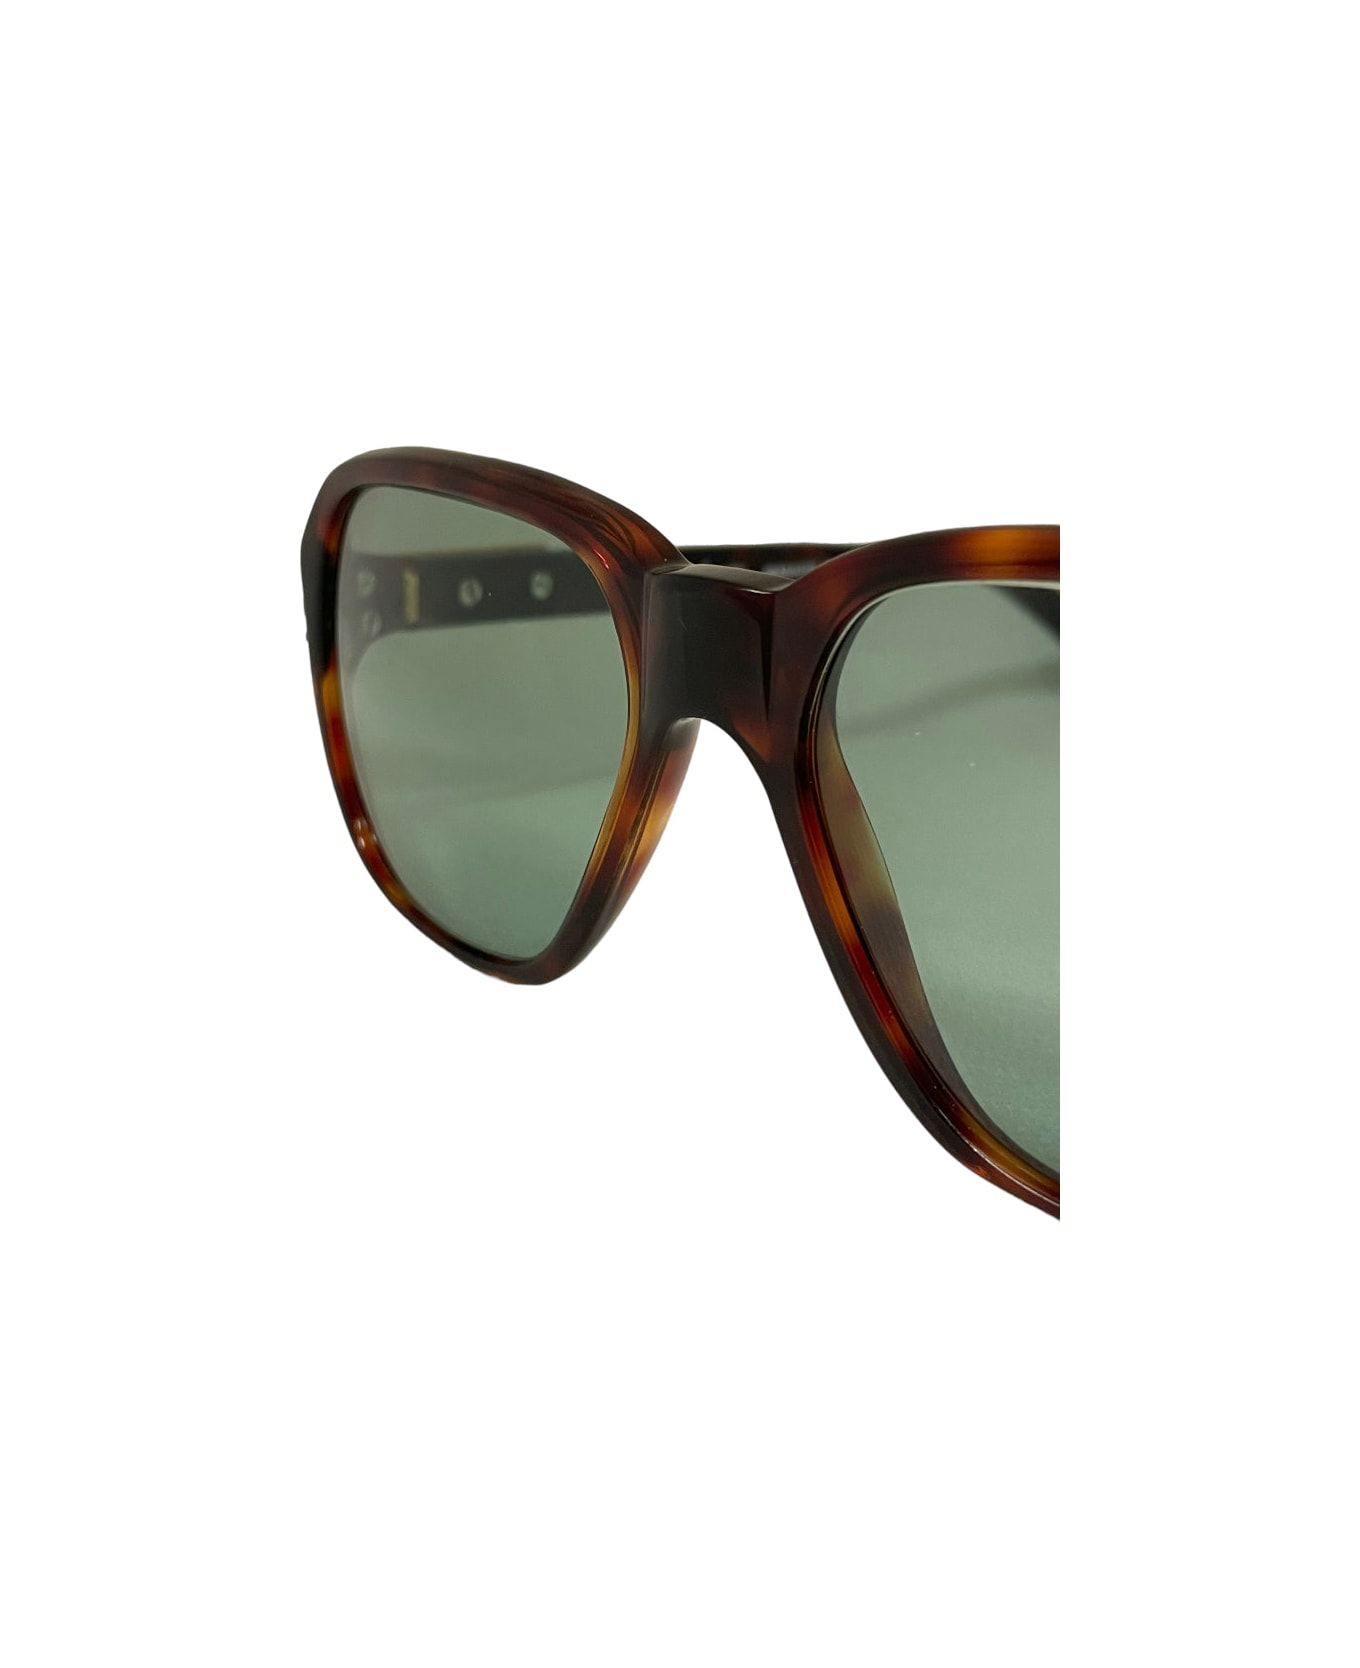 Persol Manager - Havana Sunglasses サングラス